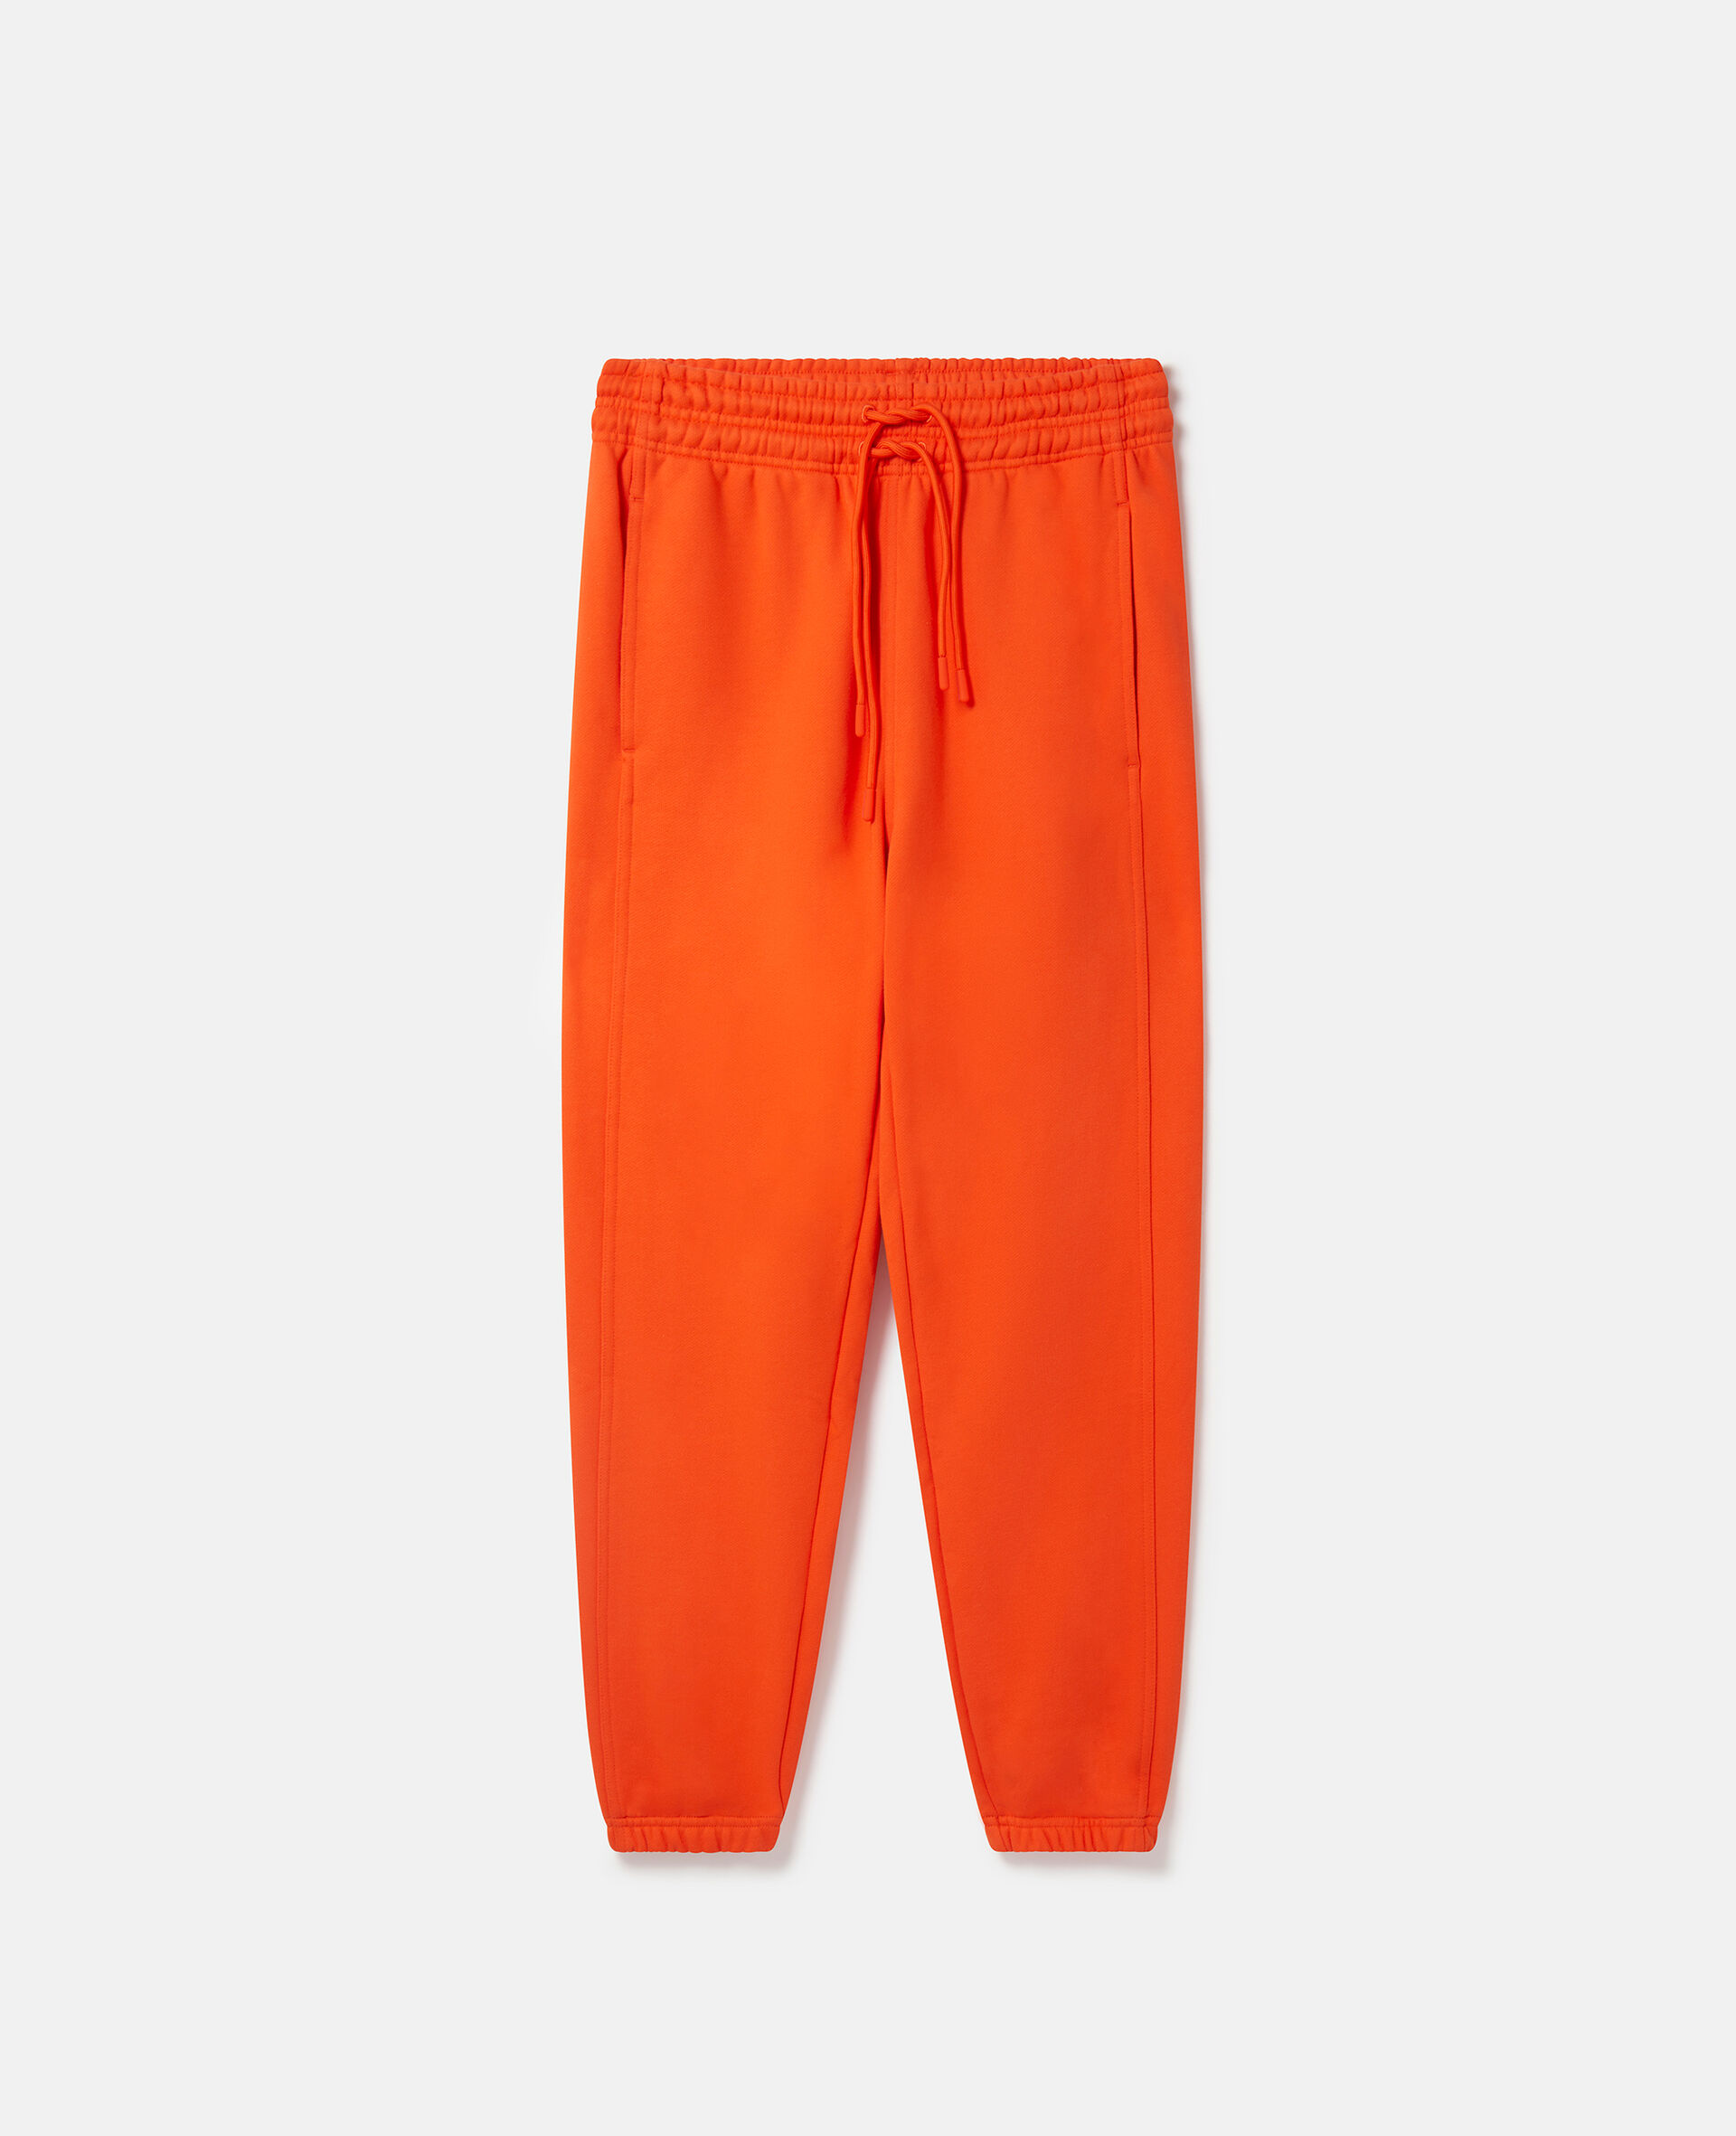 Pantalon de survêtement TrueCasuals-Orange-medium